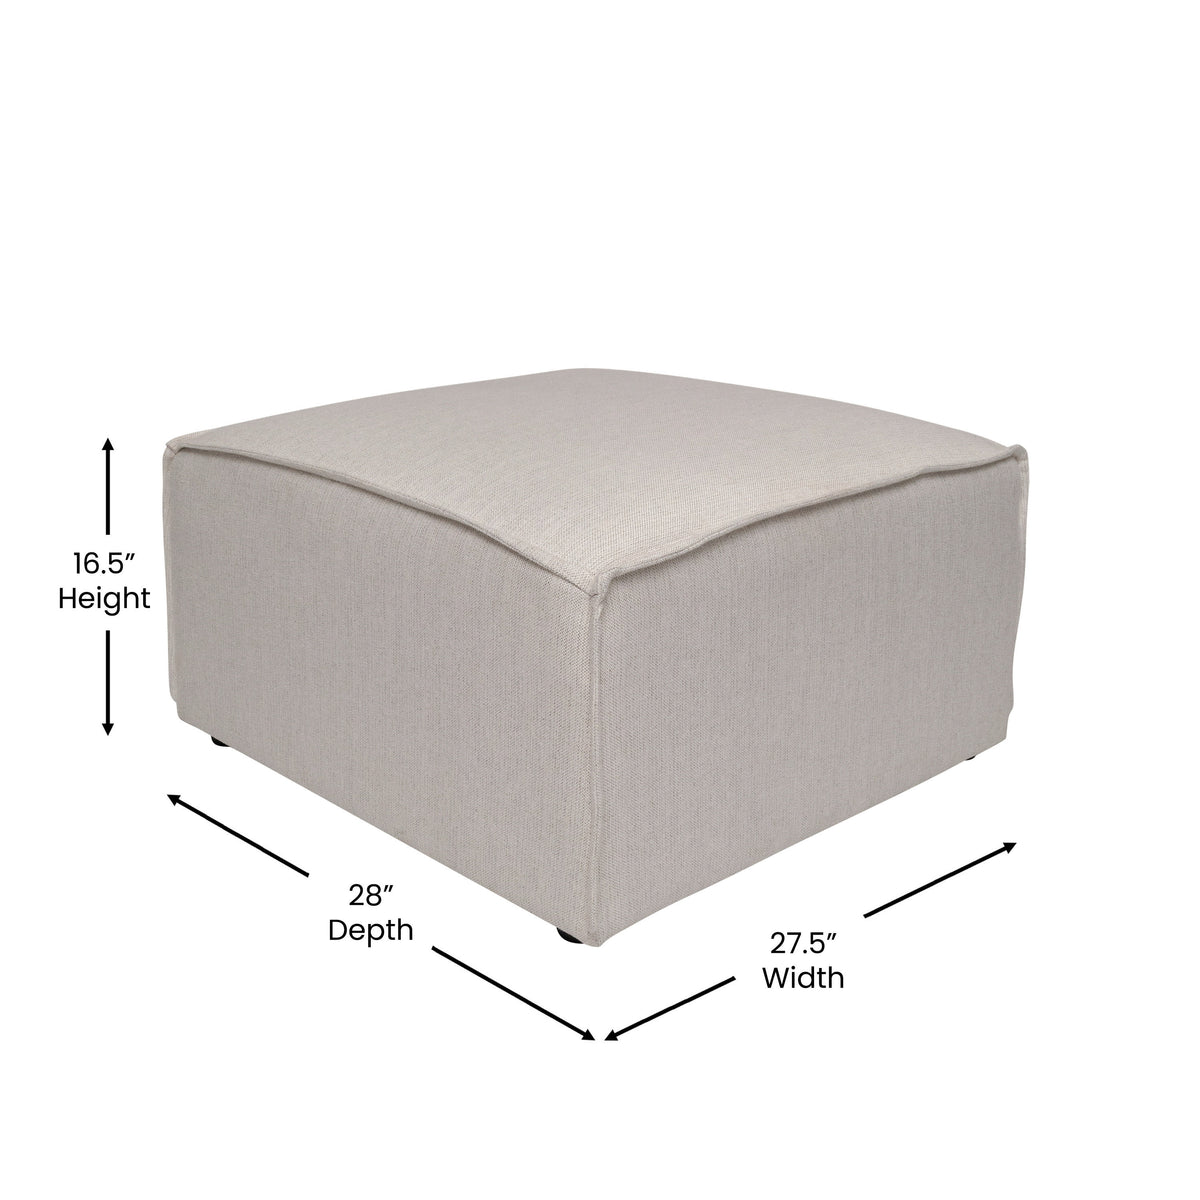 Cream |#| Contemporary Modular Sectional Sofa Ottoman in Cream Fabric